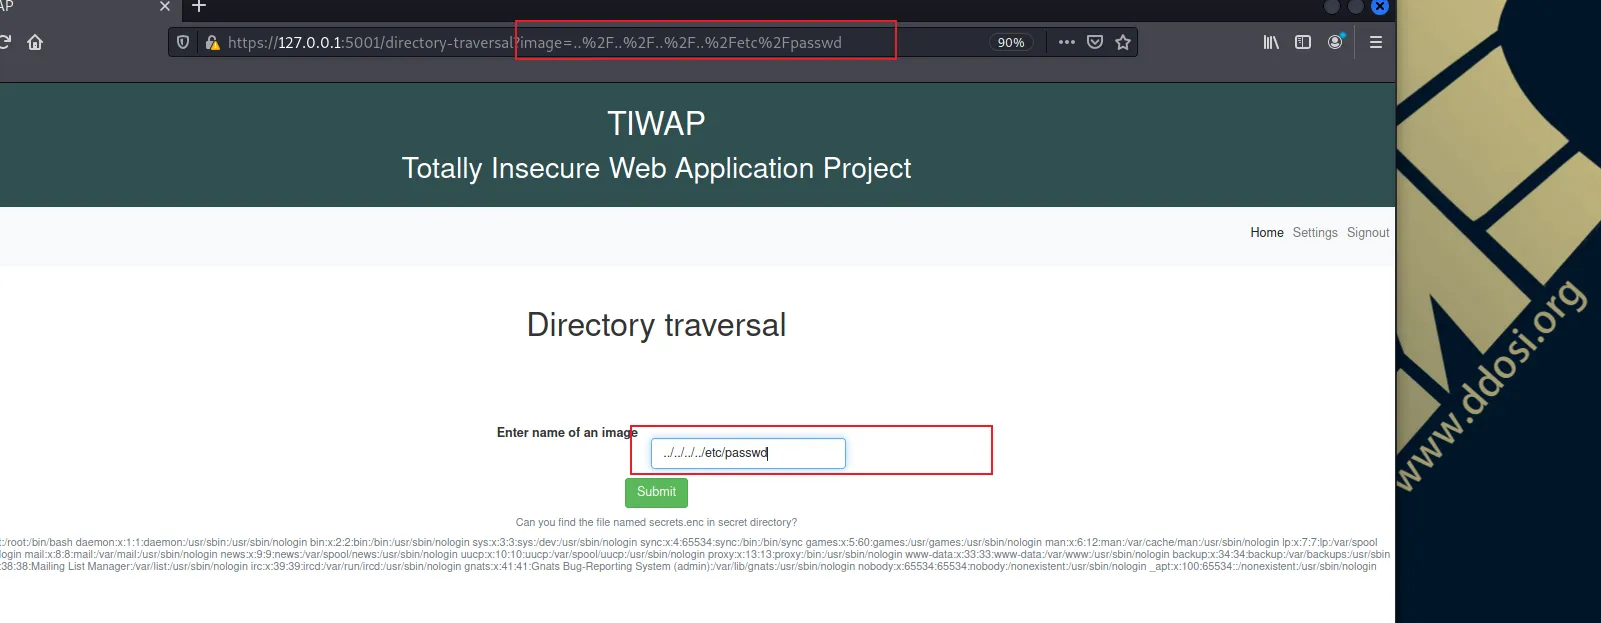 TIWAP 漏洞靶场|包含20个漏洞